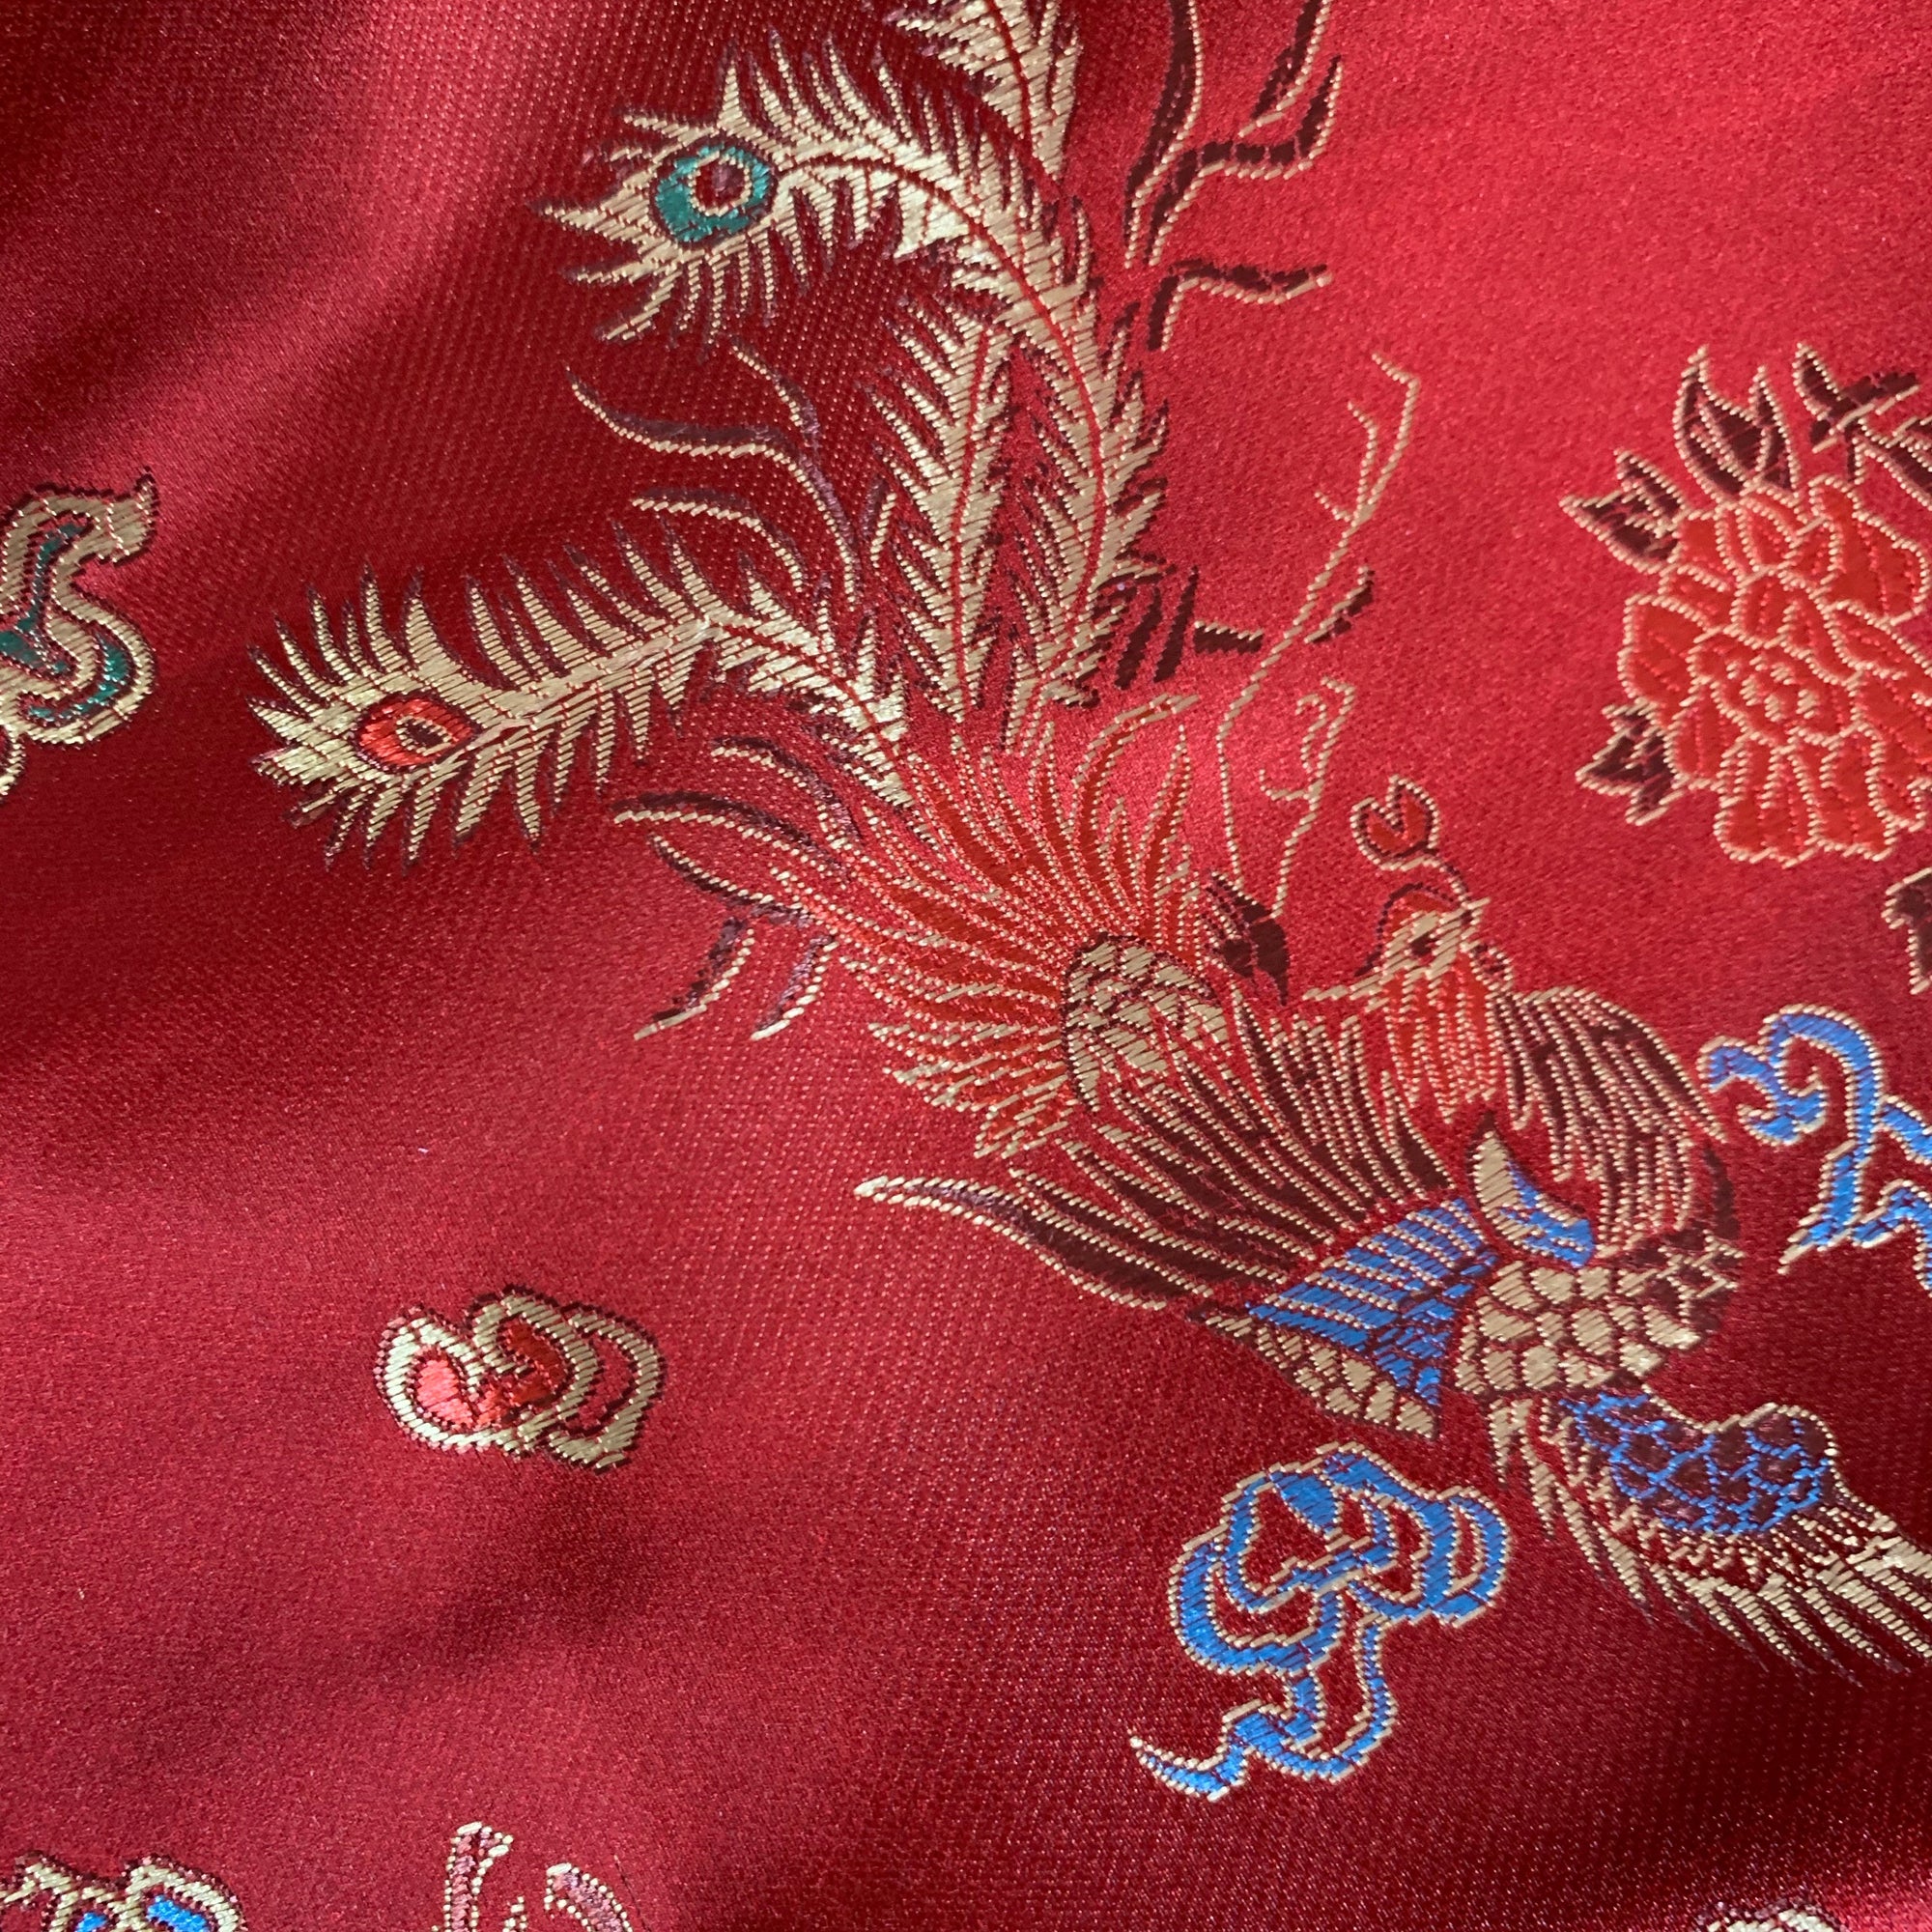 Hope DARK RED Dragon Brocade Chinese Satin Fabric by the Yard